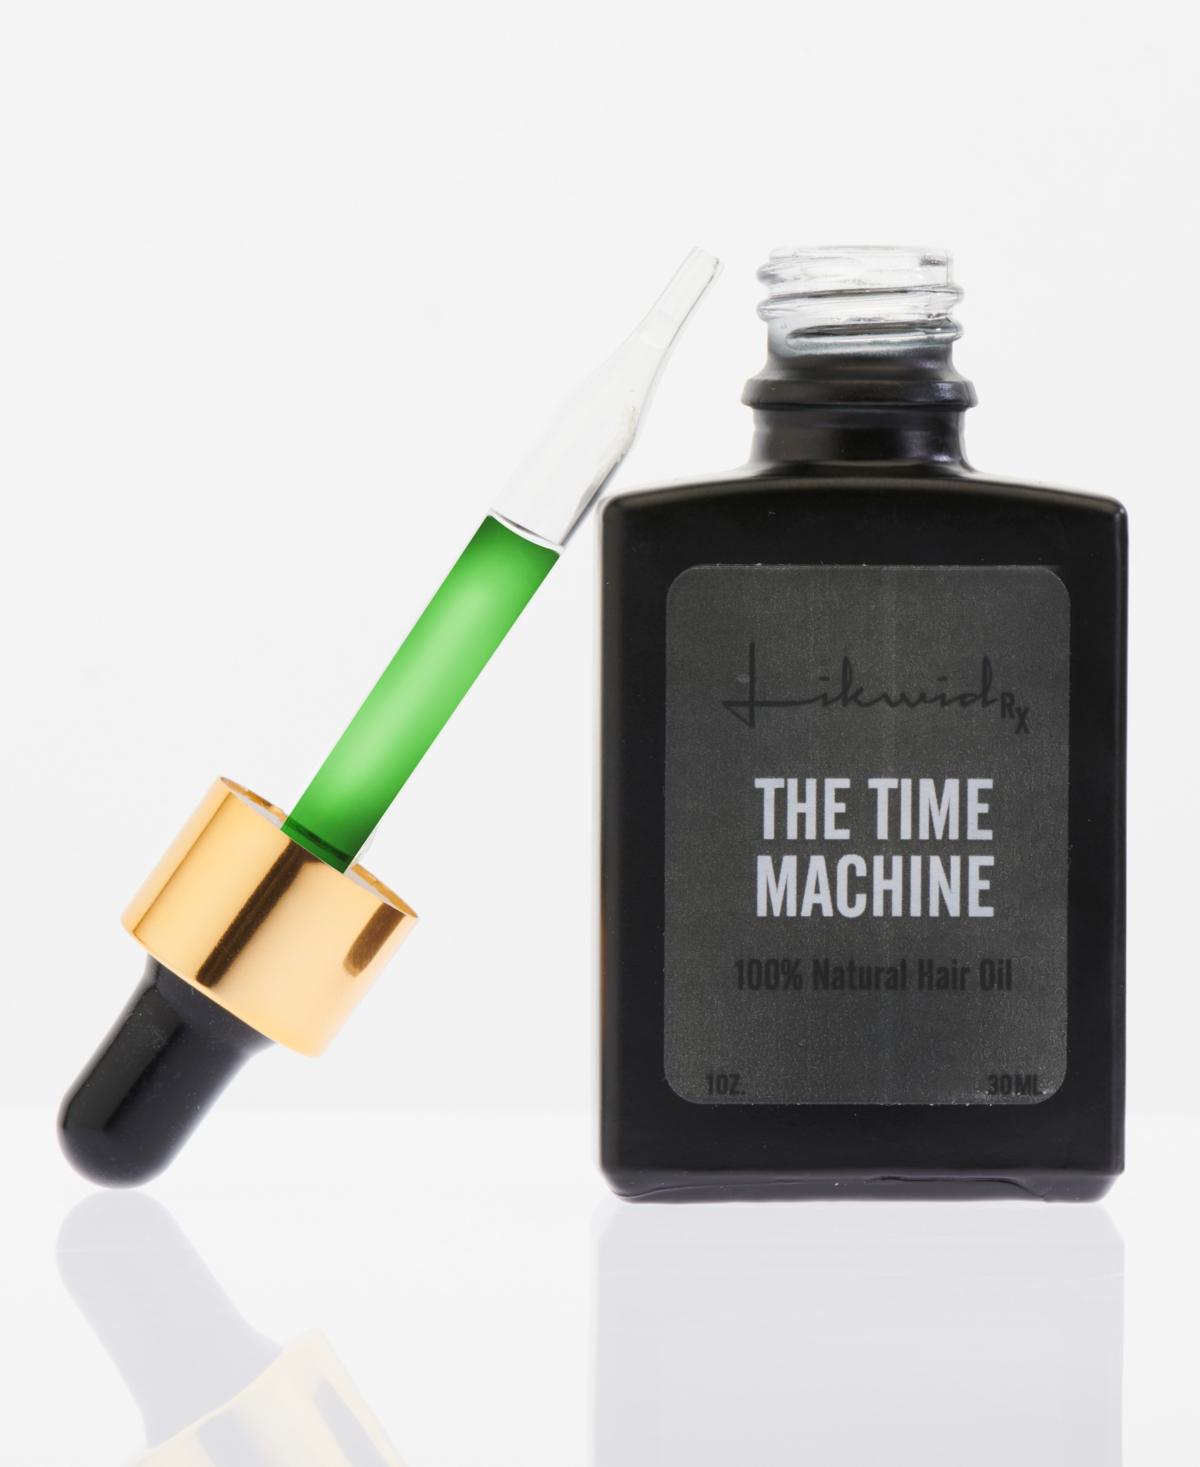 The Time Machine 100% Natural Hair Oil, 1 oz - Gray